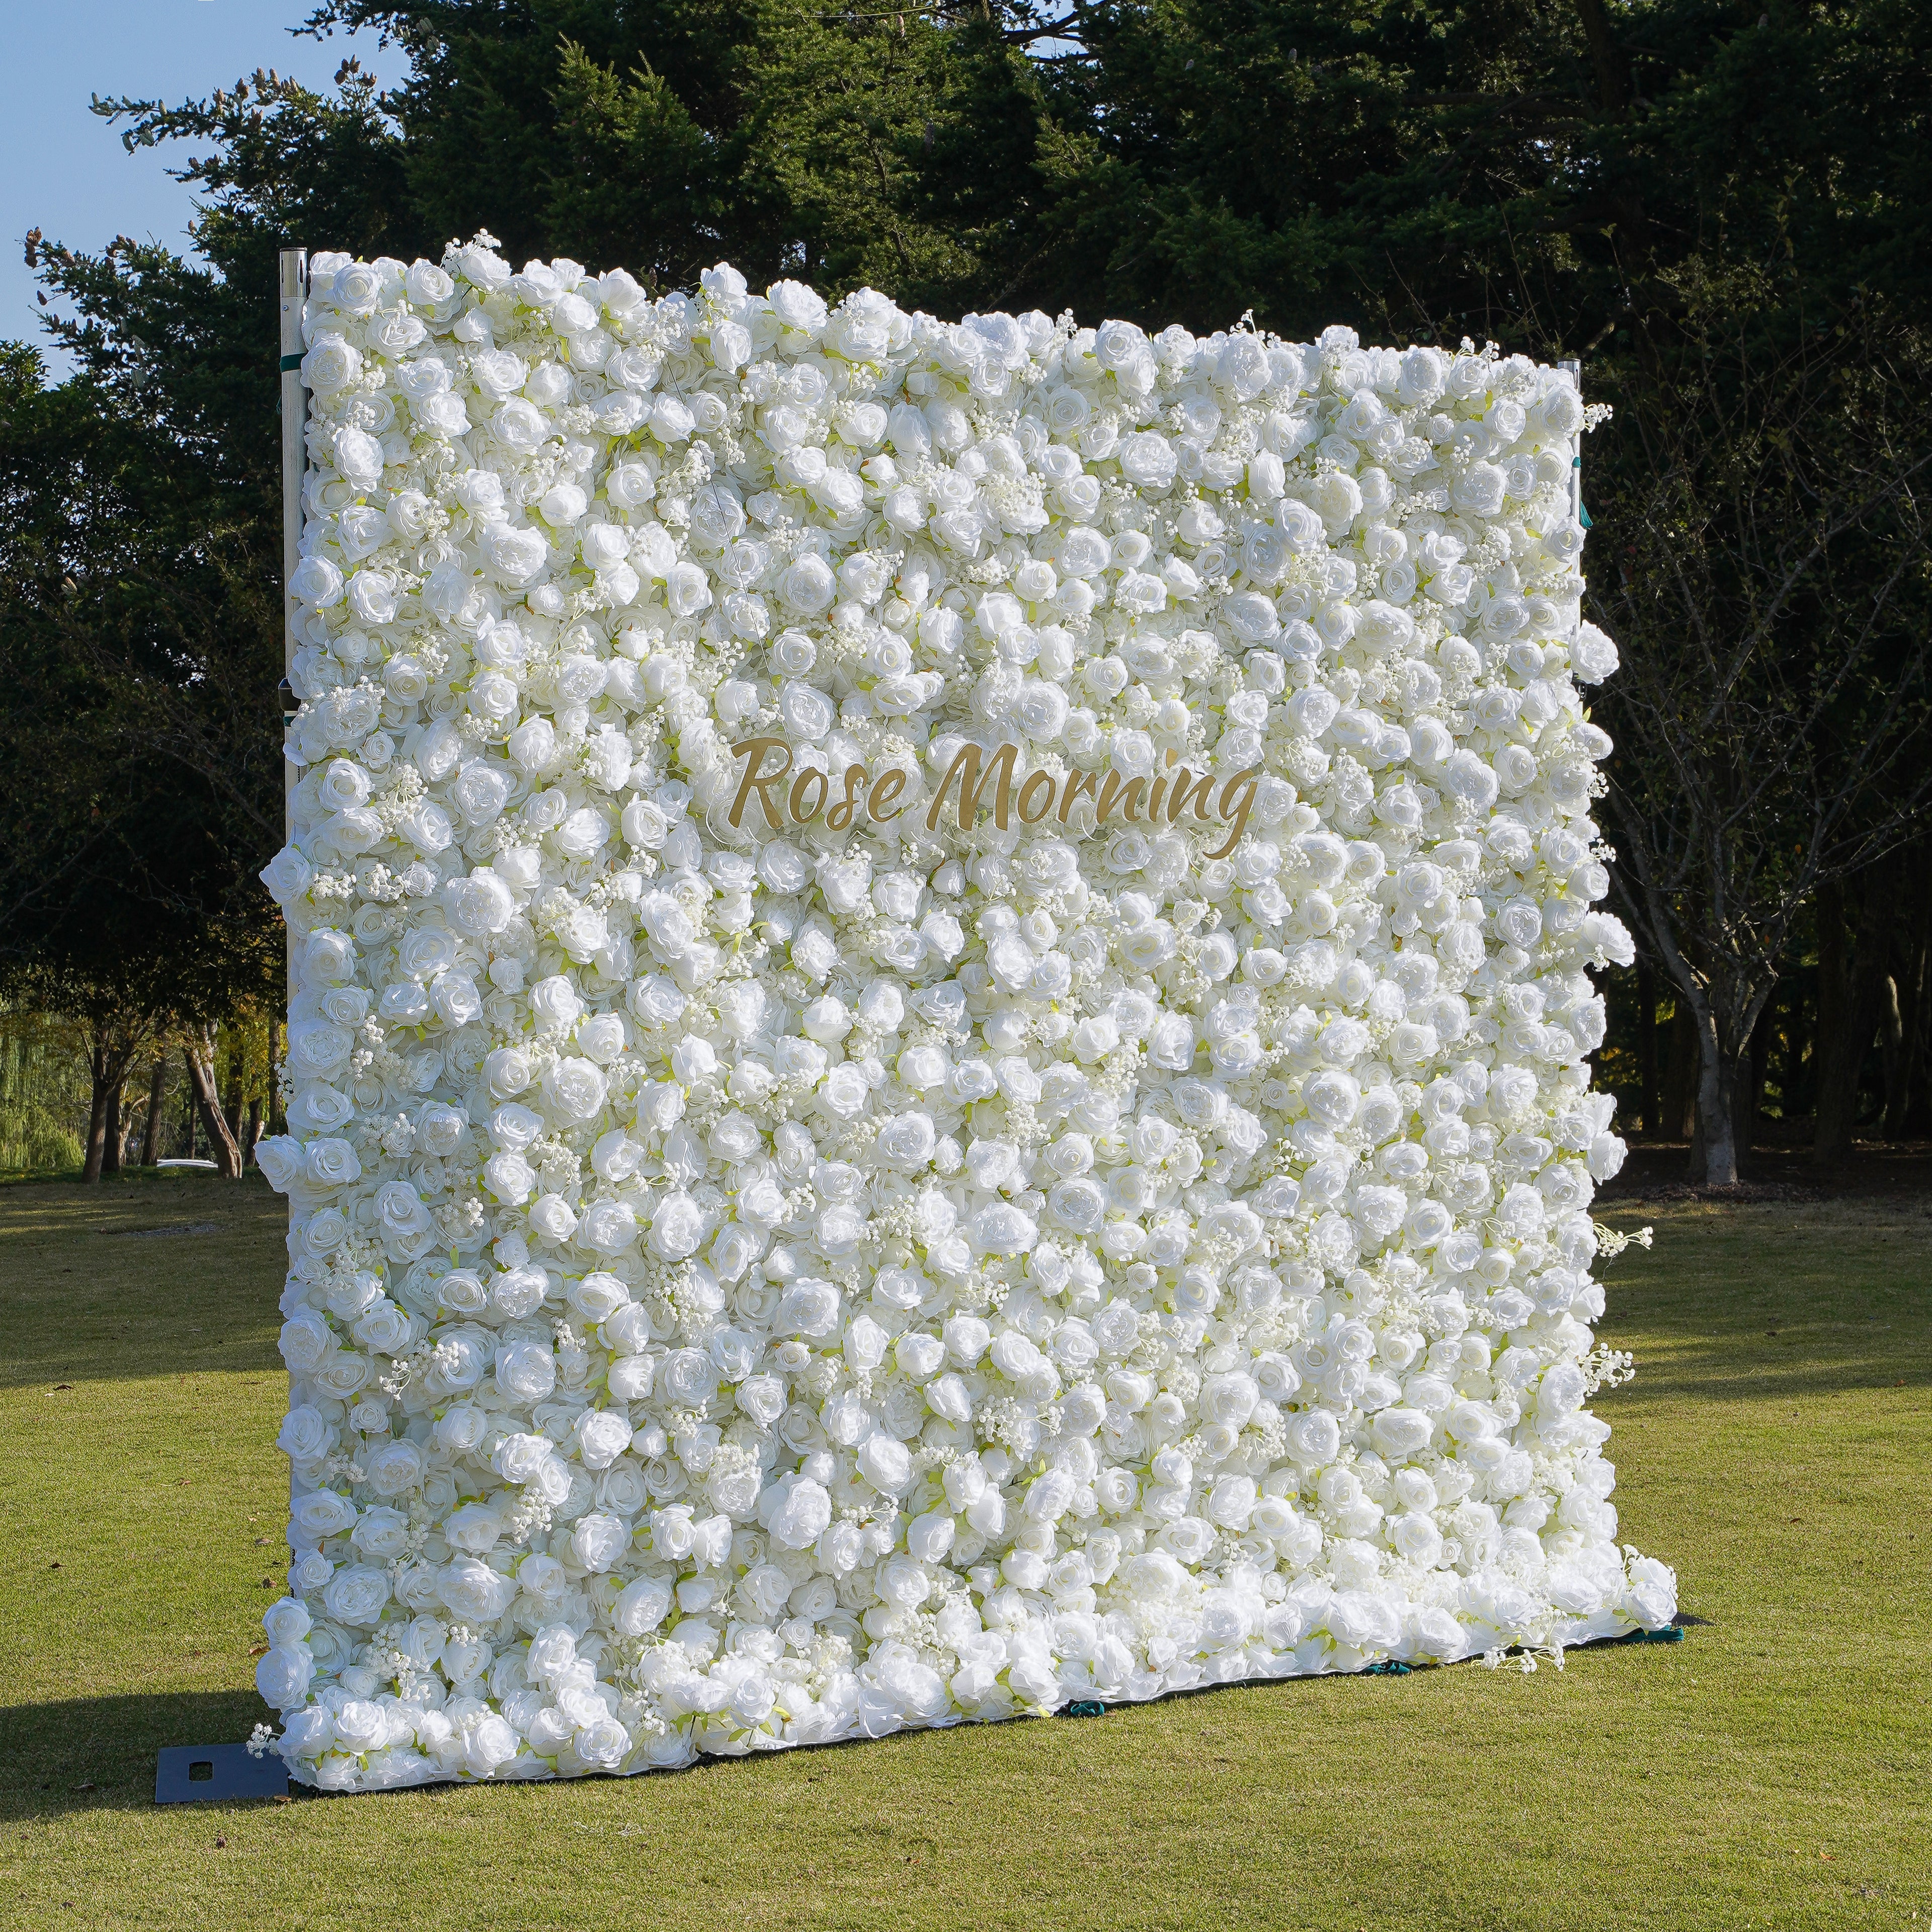 HSMQHJWE Dry Foam for Artificial Flowers Imitation Flower Wall